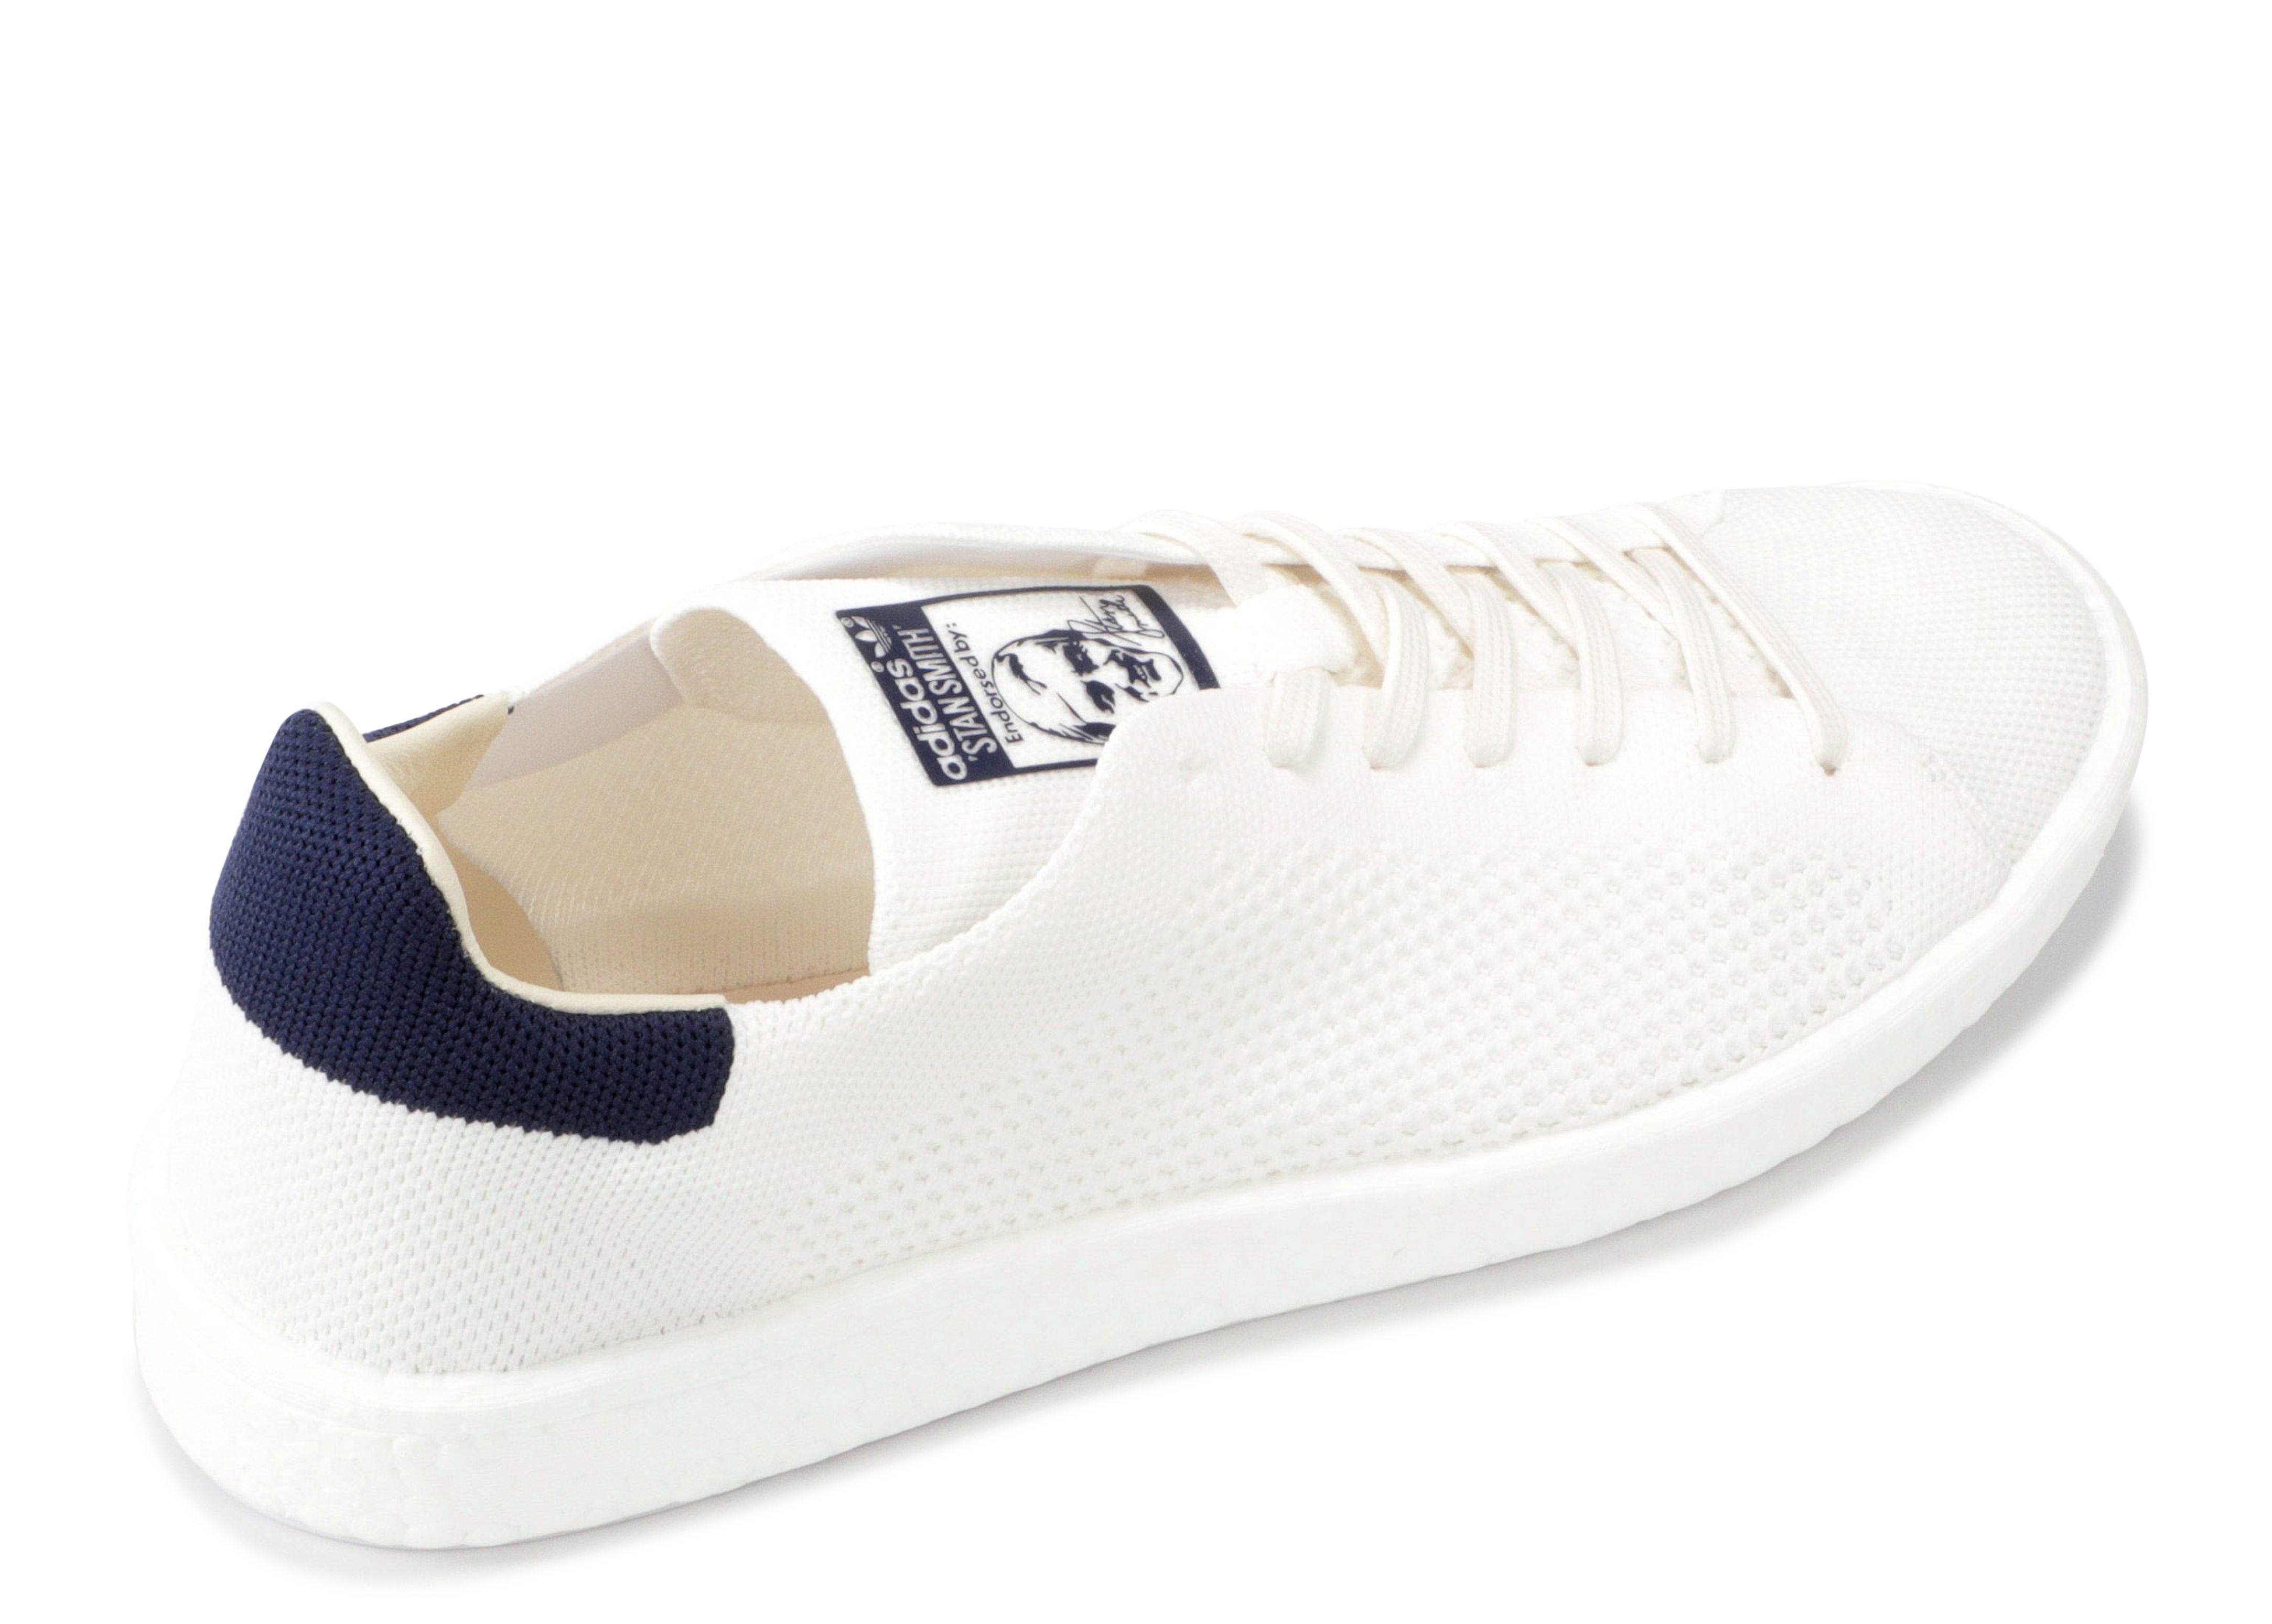 adidas Originals Stan Smith Sock Primeknit Sneakers In Navy